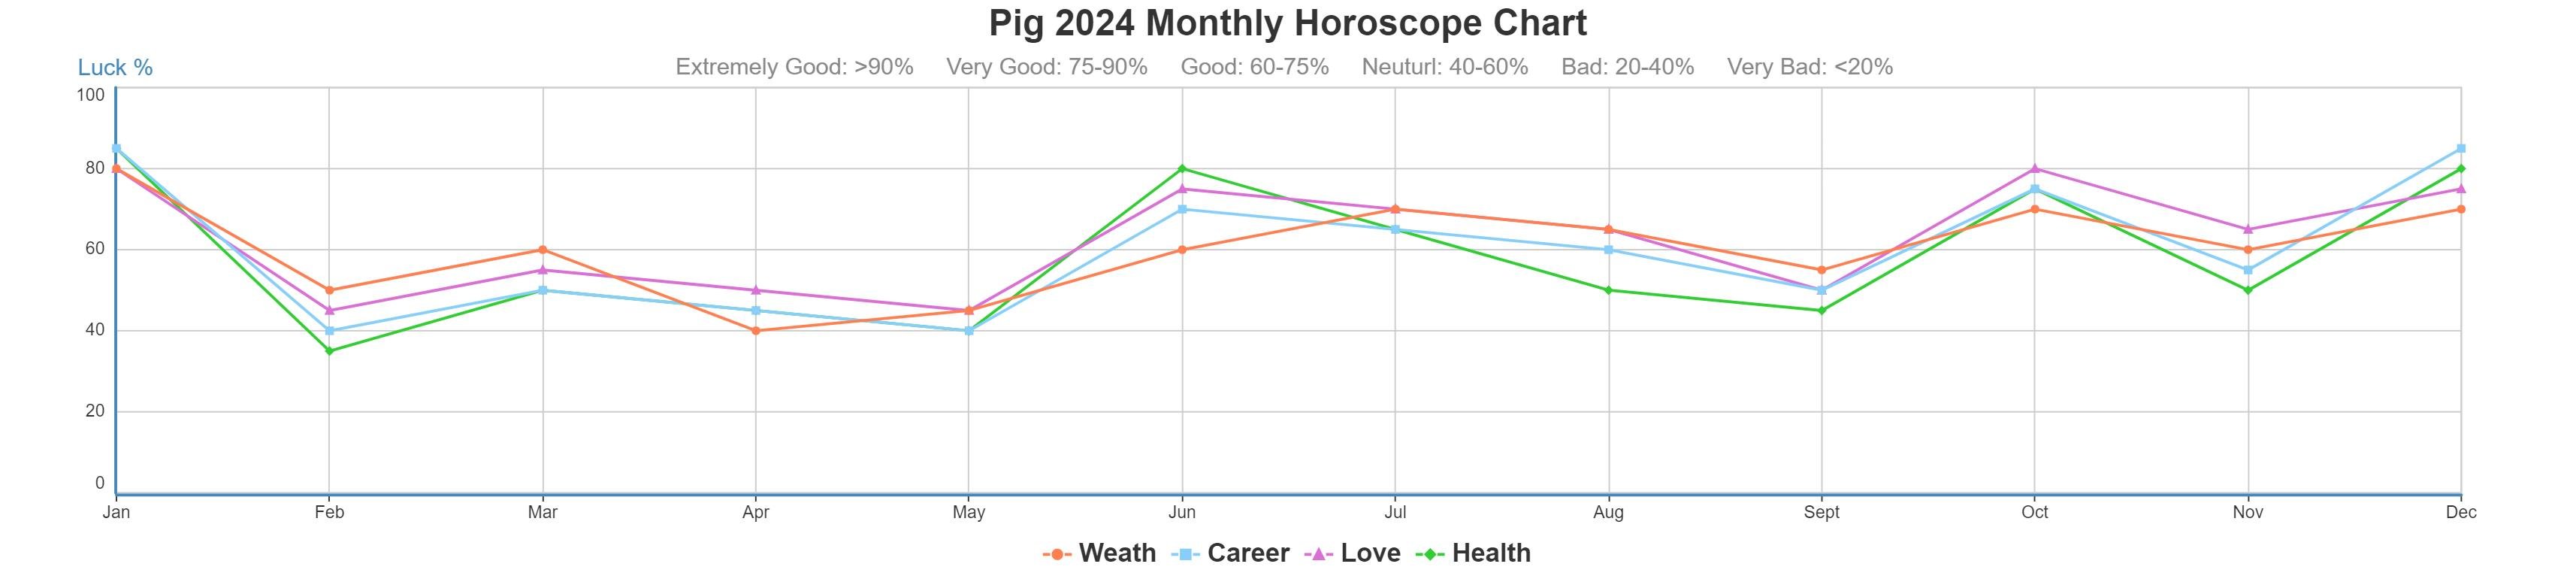 Pig 2024 monthly horoscope